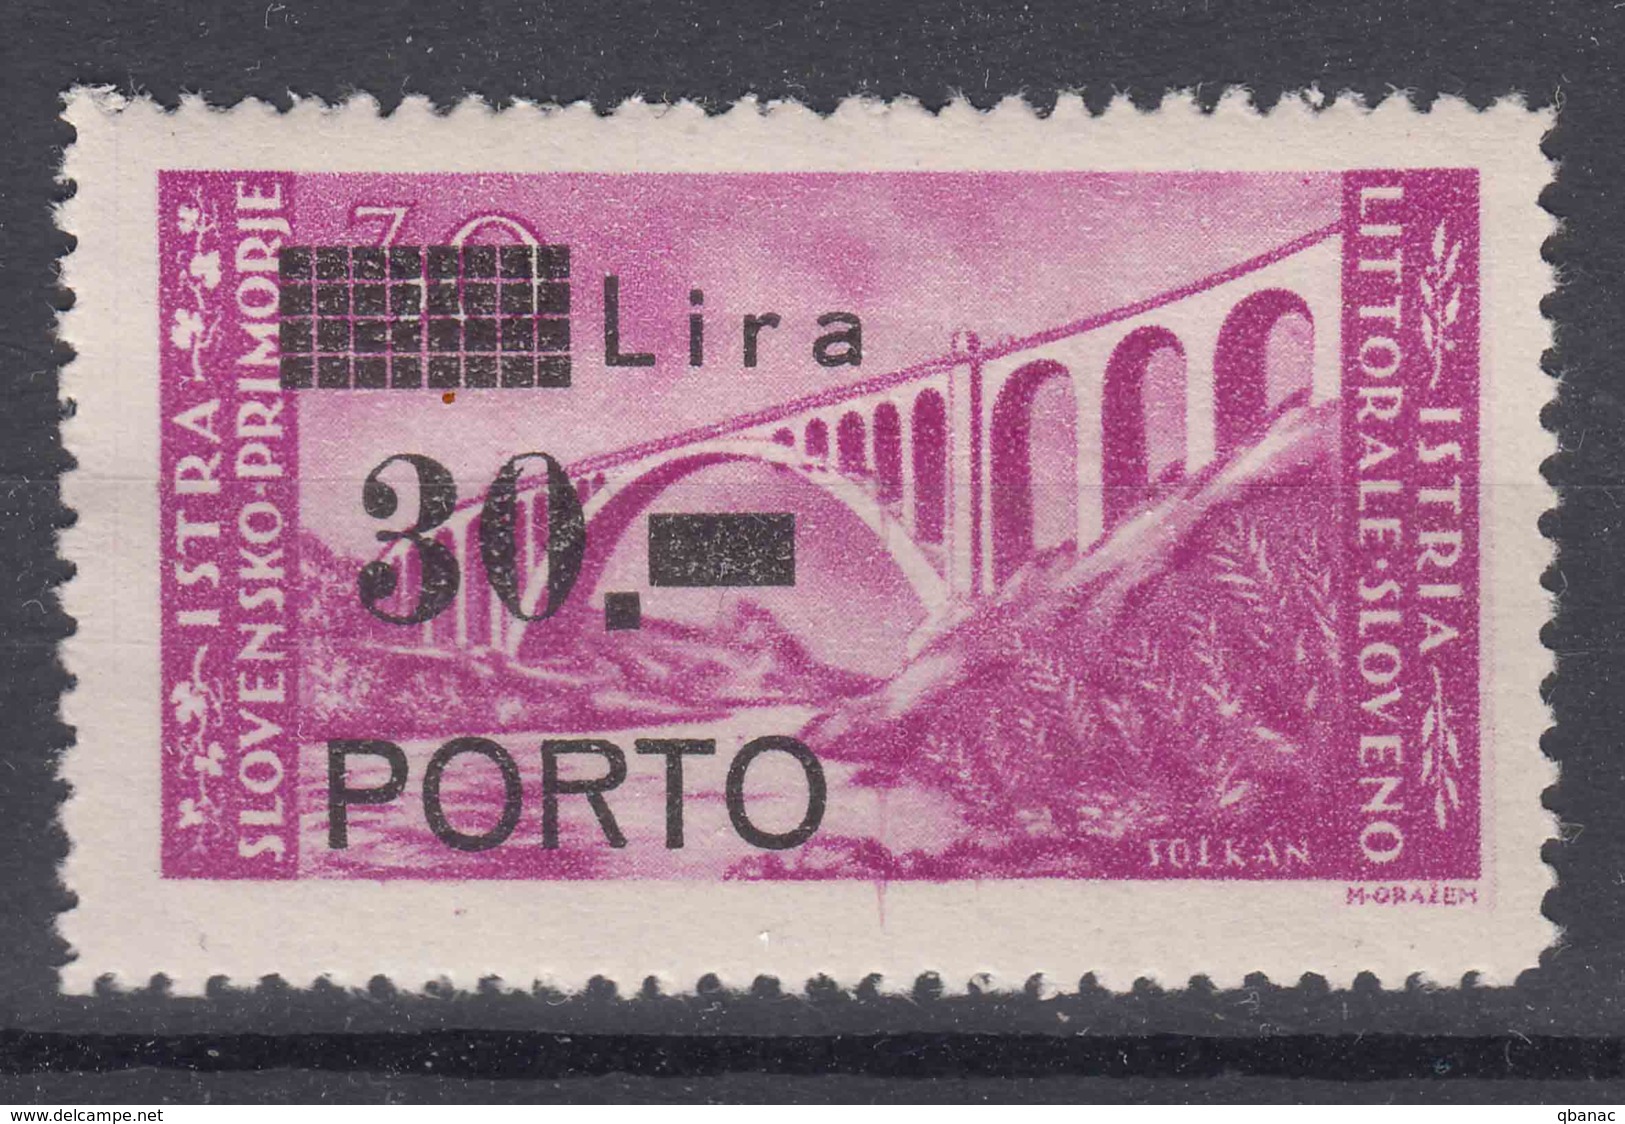 Istria Litorale Yugoslavia Occupation, Porto 1946 Sassone#13 Mint Hinged - Yugoslavian Occ.: Istria